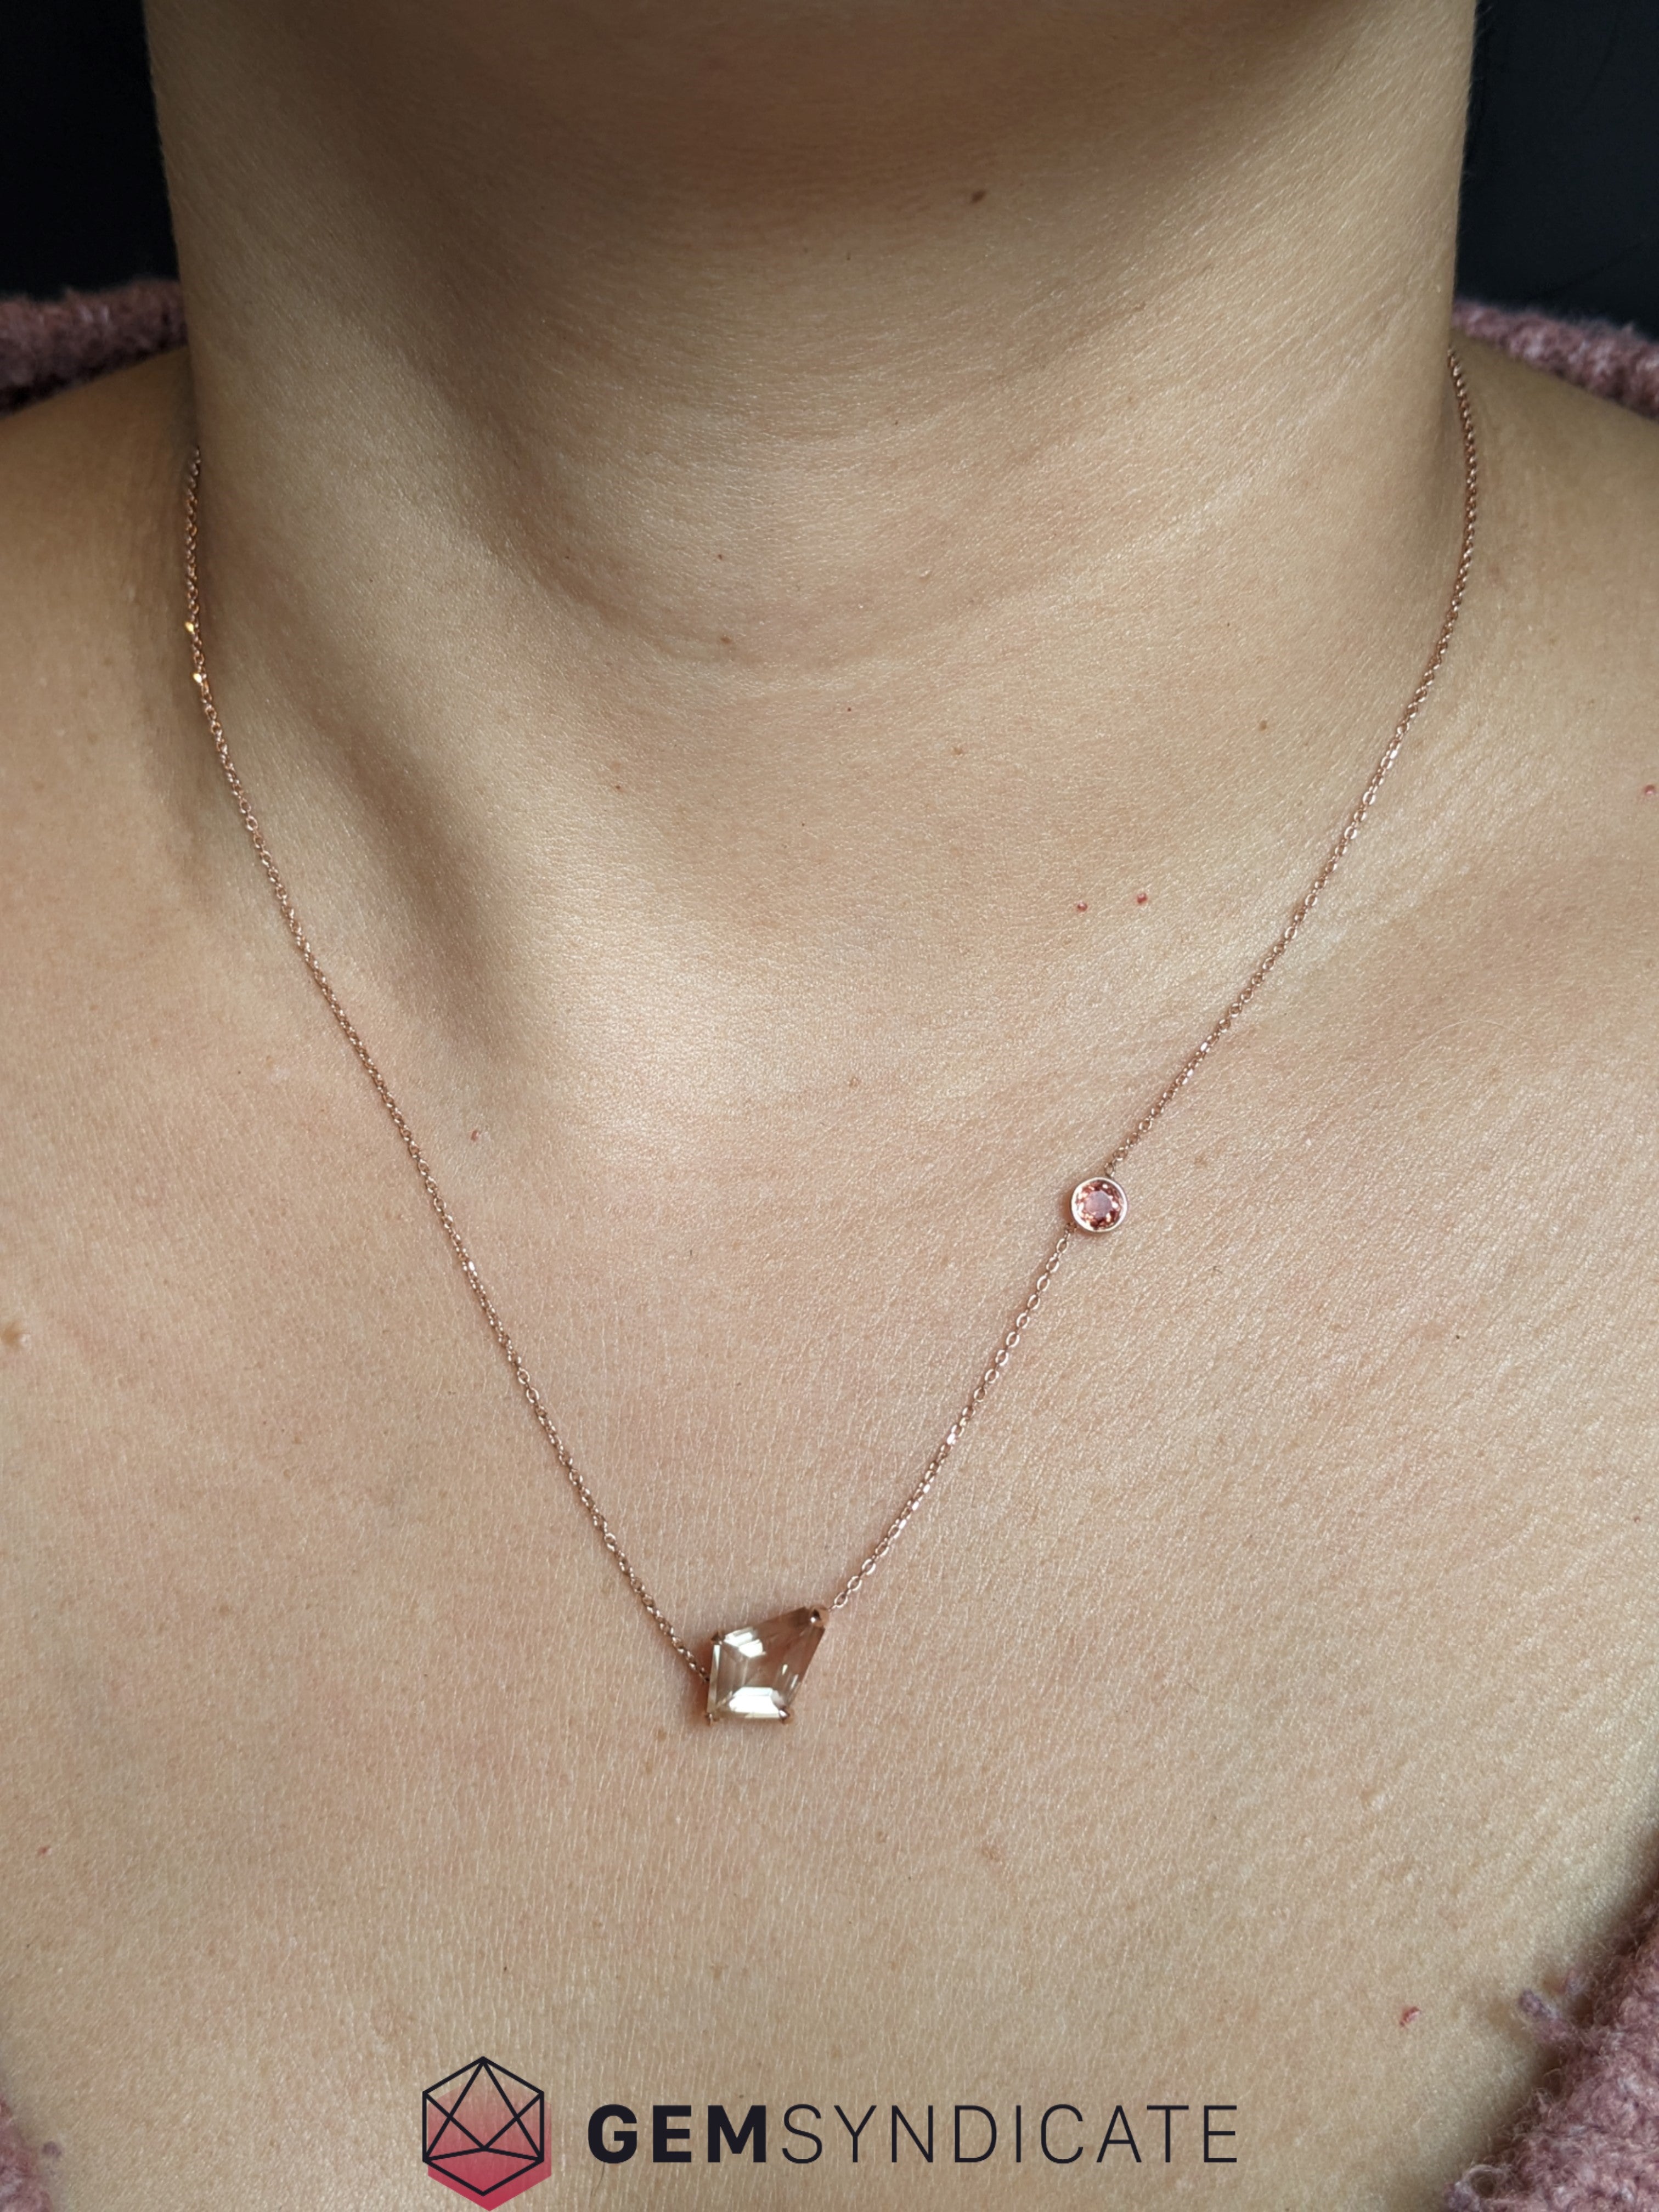 Flirty Peach Oregon Sunstone Necklace in 14k Rose Gold